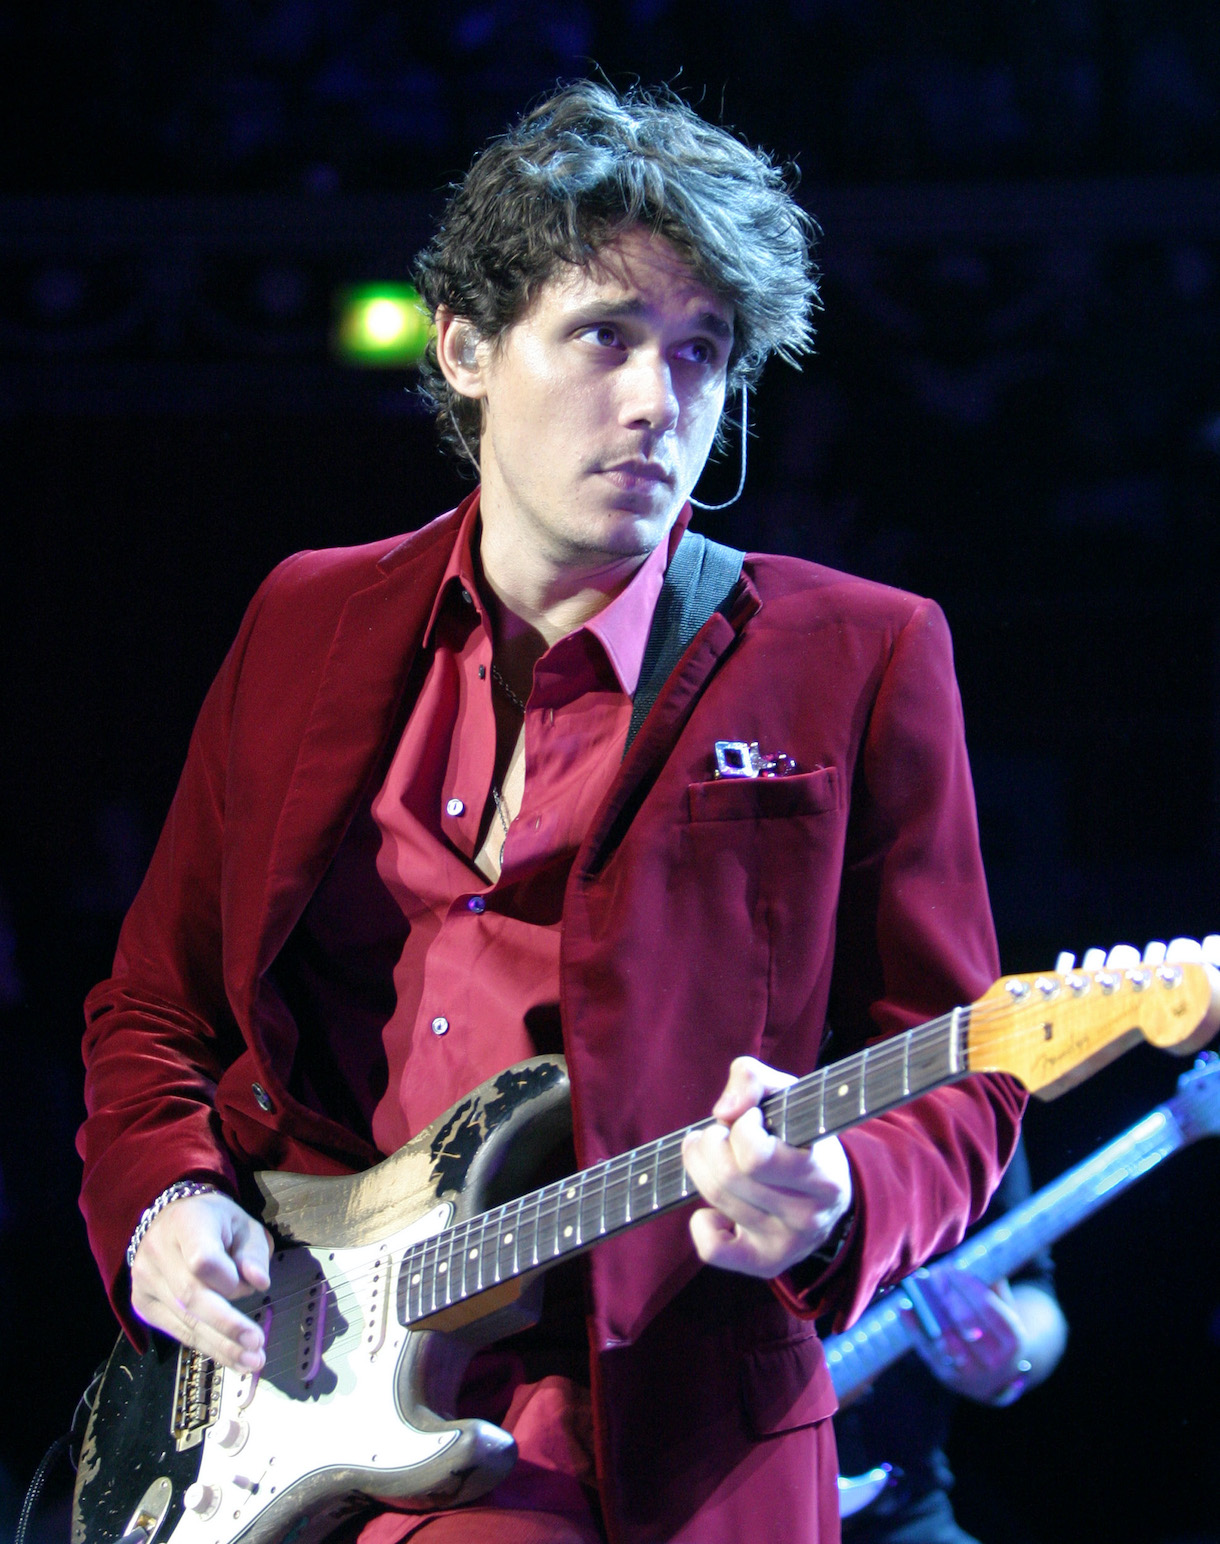 John Mayer in concert at Royal Albert Hall September 17, 2007